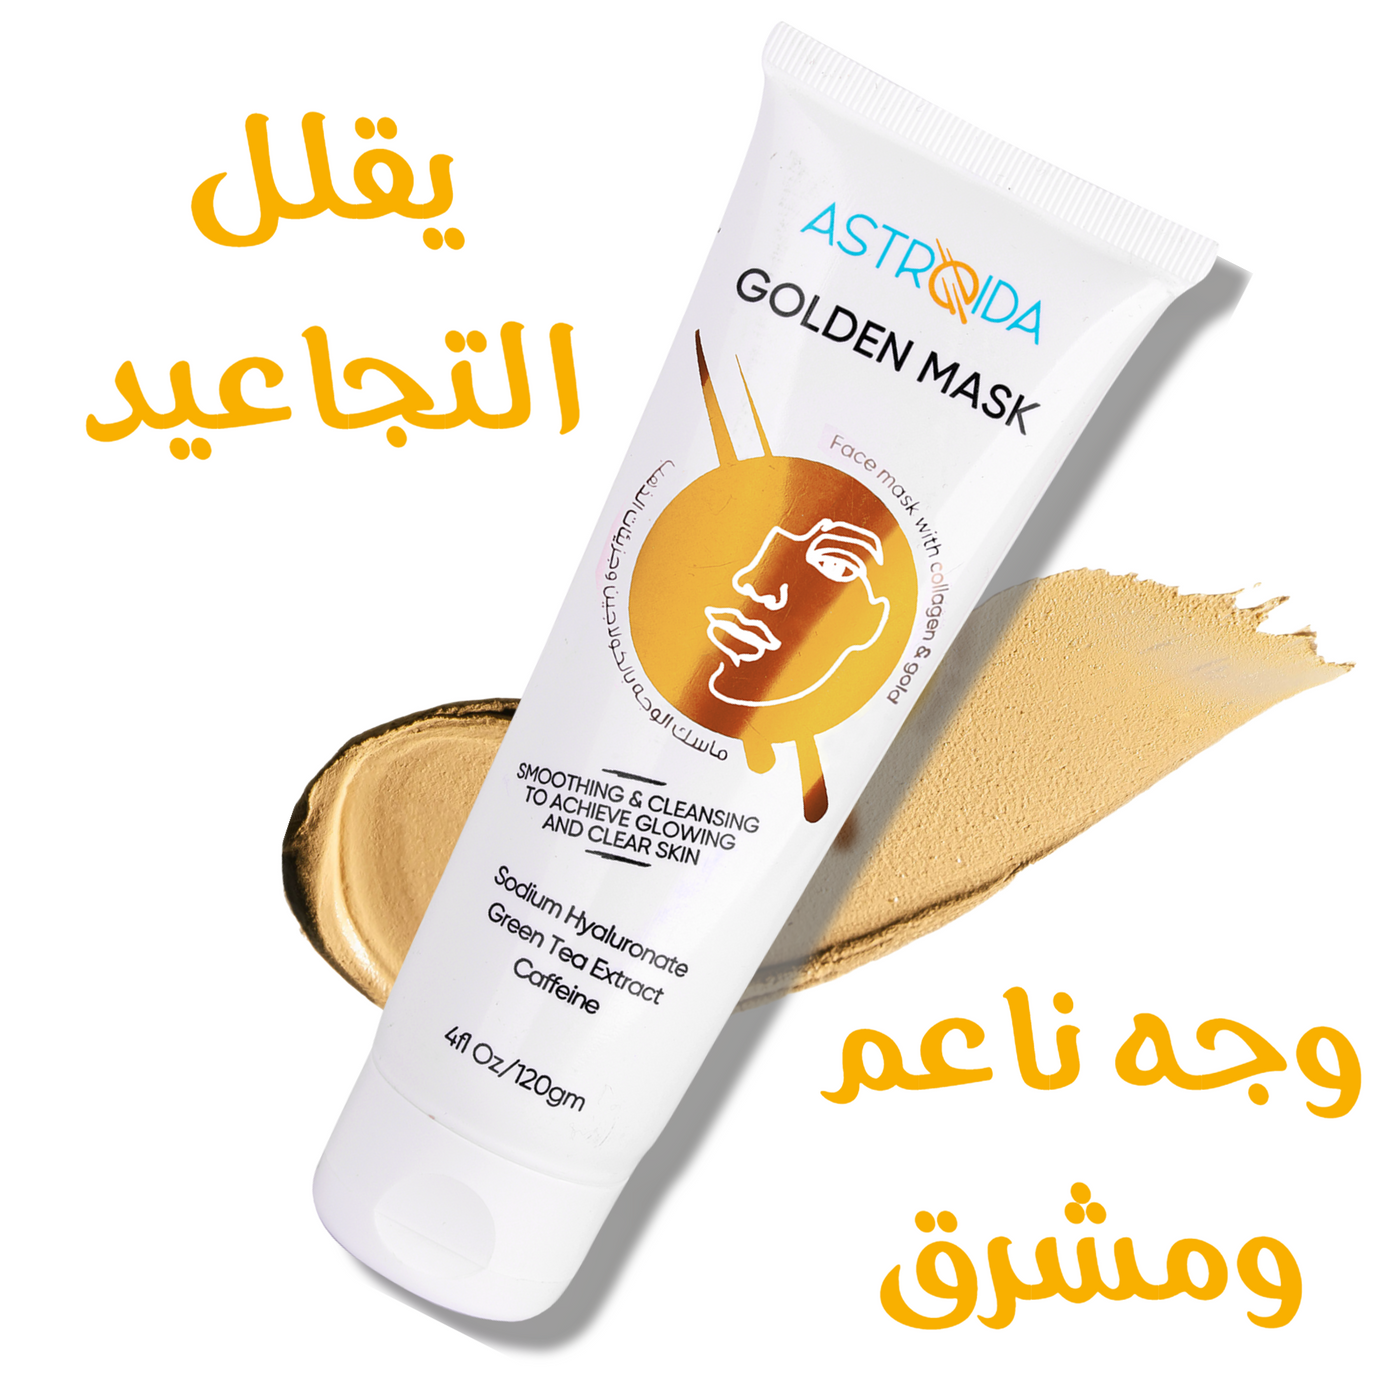 Astroida Golden Rejuvenating Mask Pack of 2 + Silicon Brush - Astroida